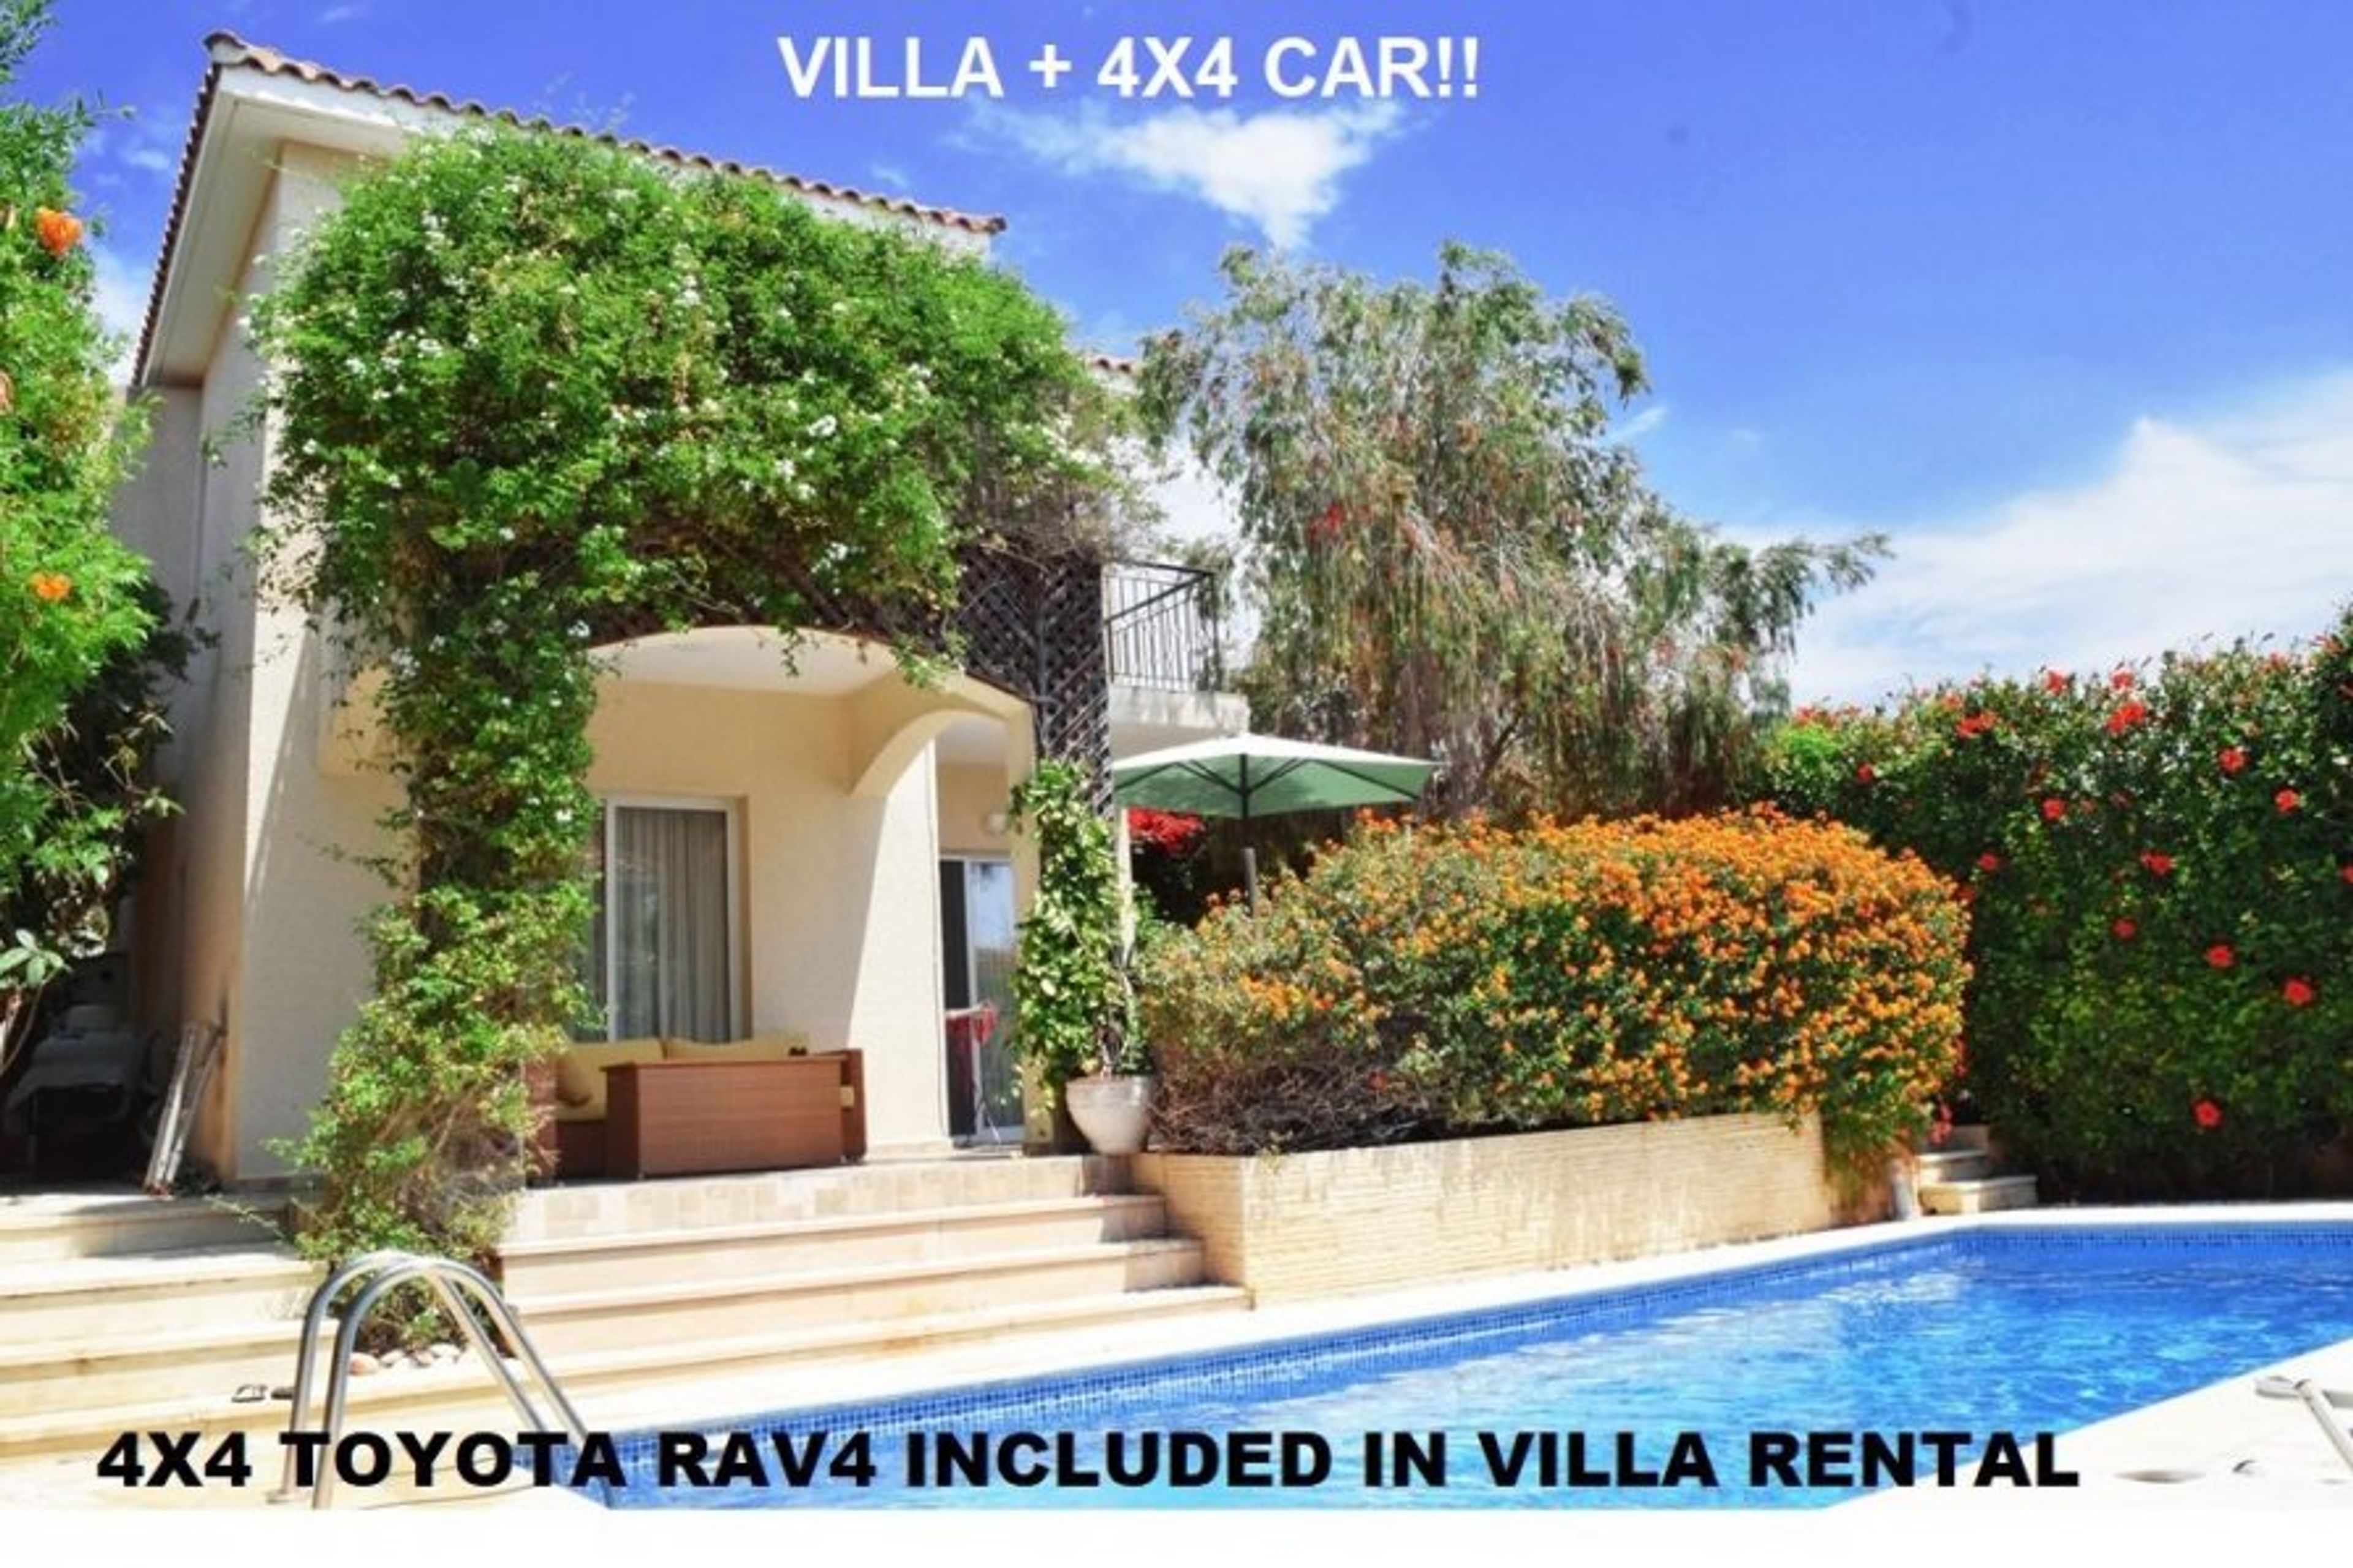 Owner's car included in villa rental